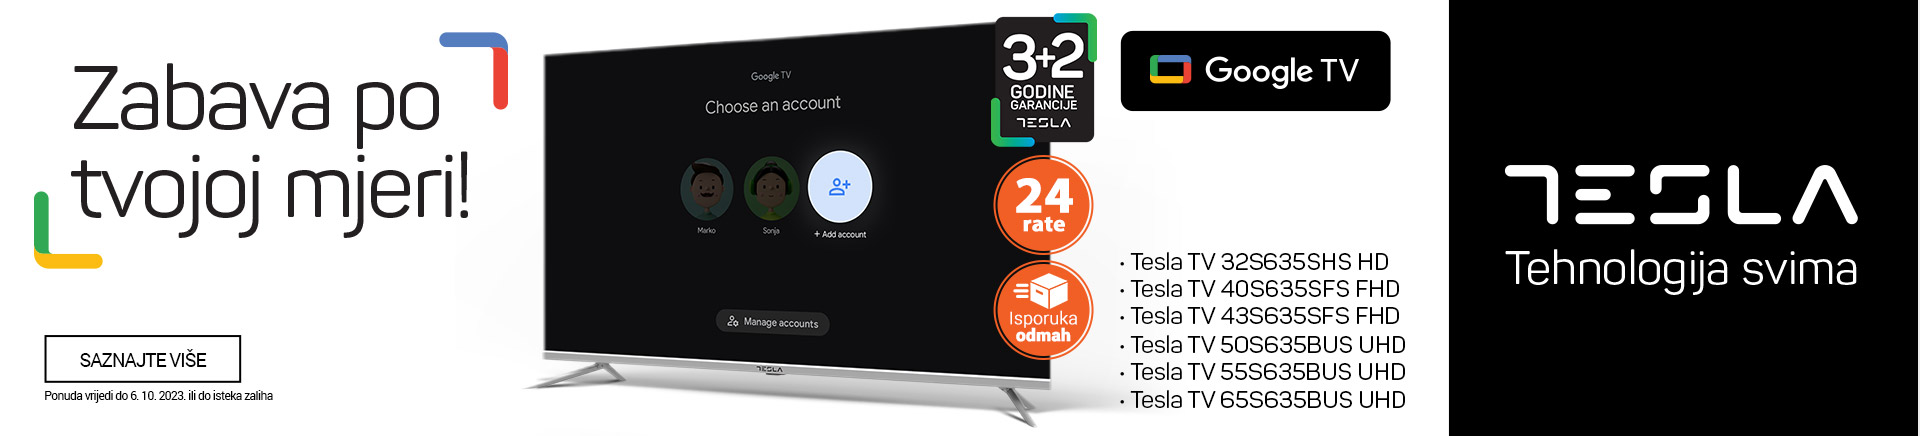 BA Tesla Google TV TABLET 768 X 436.jpg